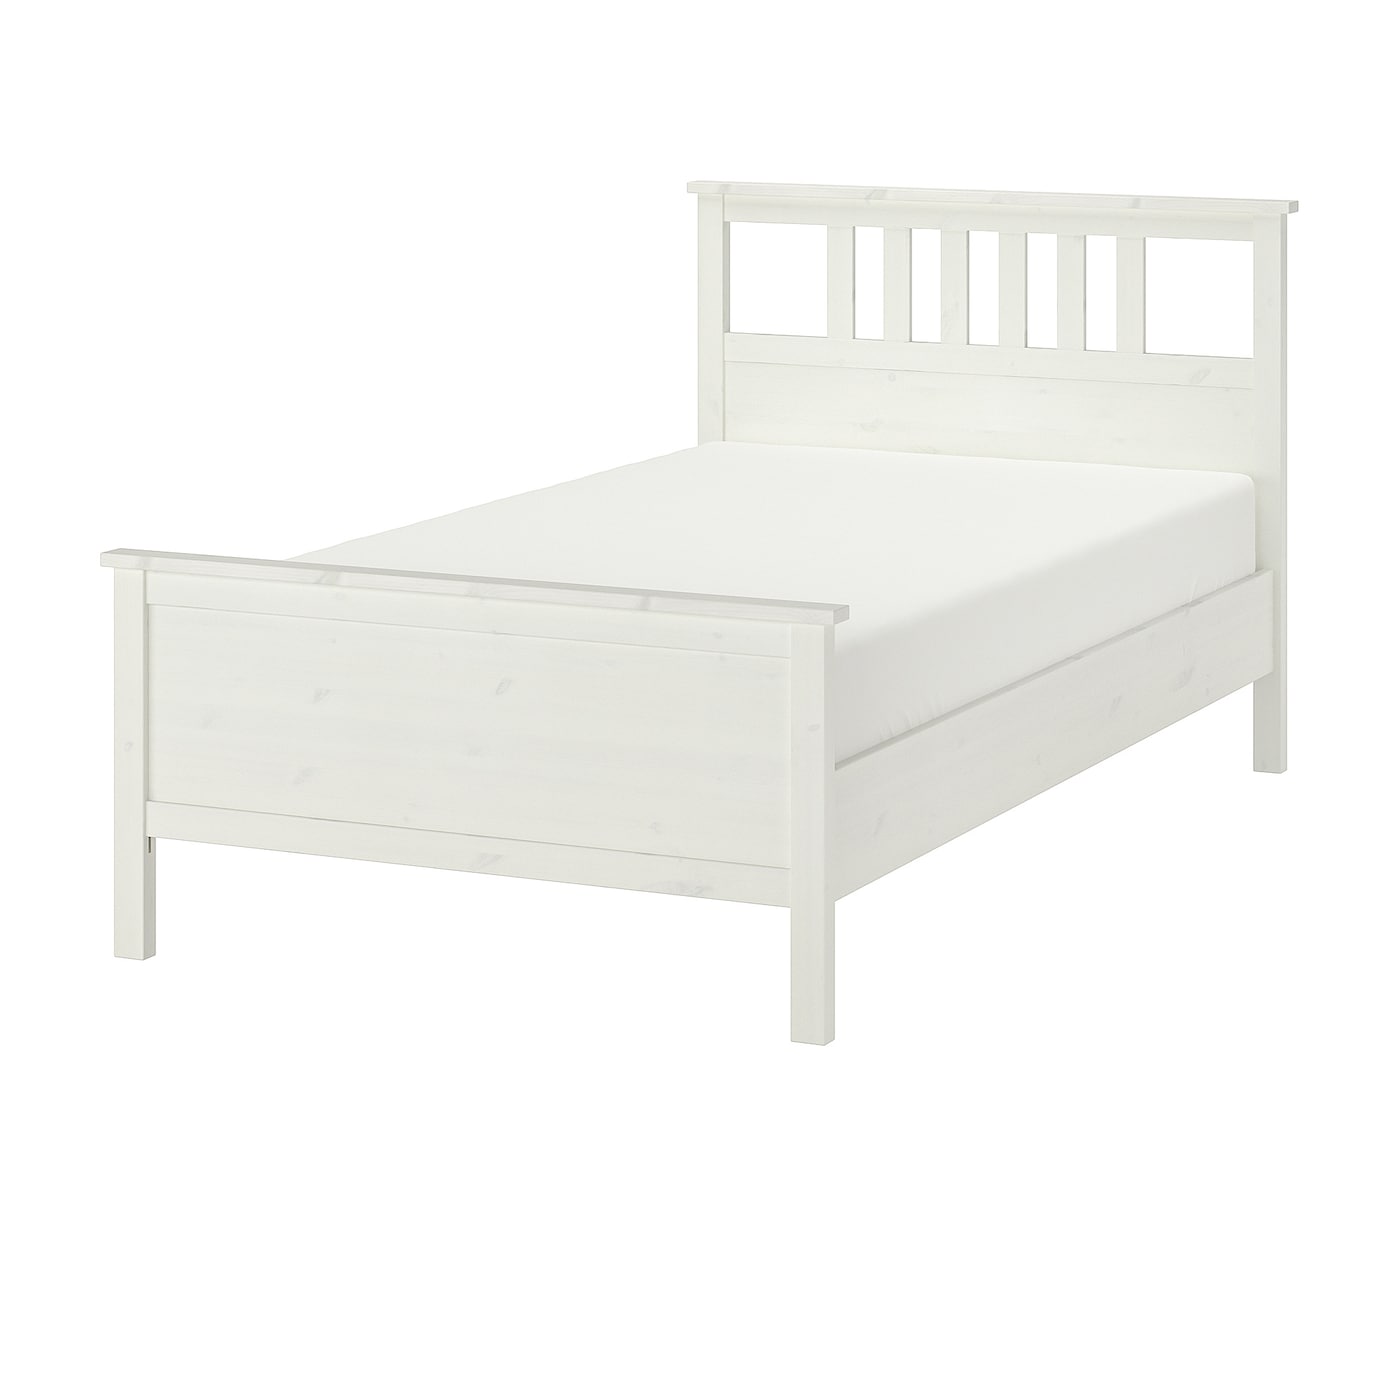 Каркас кровати - IKEA HEMNES, 200х120 см, белый, ХЕМНЭС ИКЕА